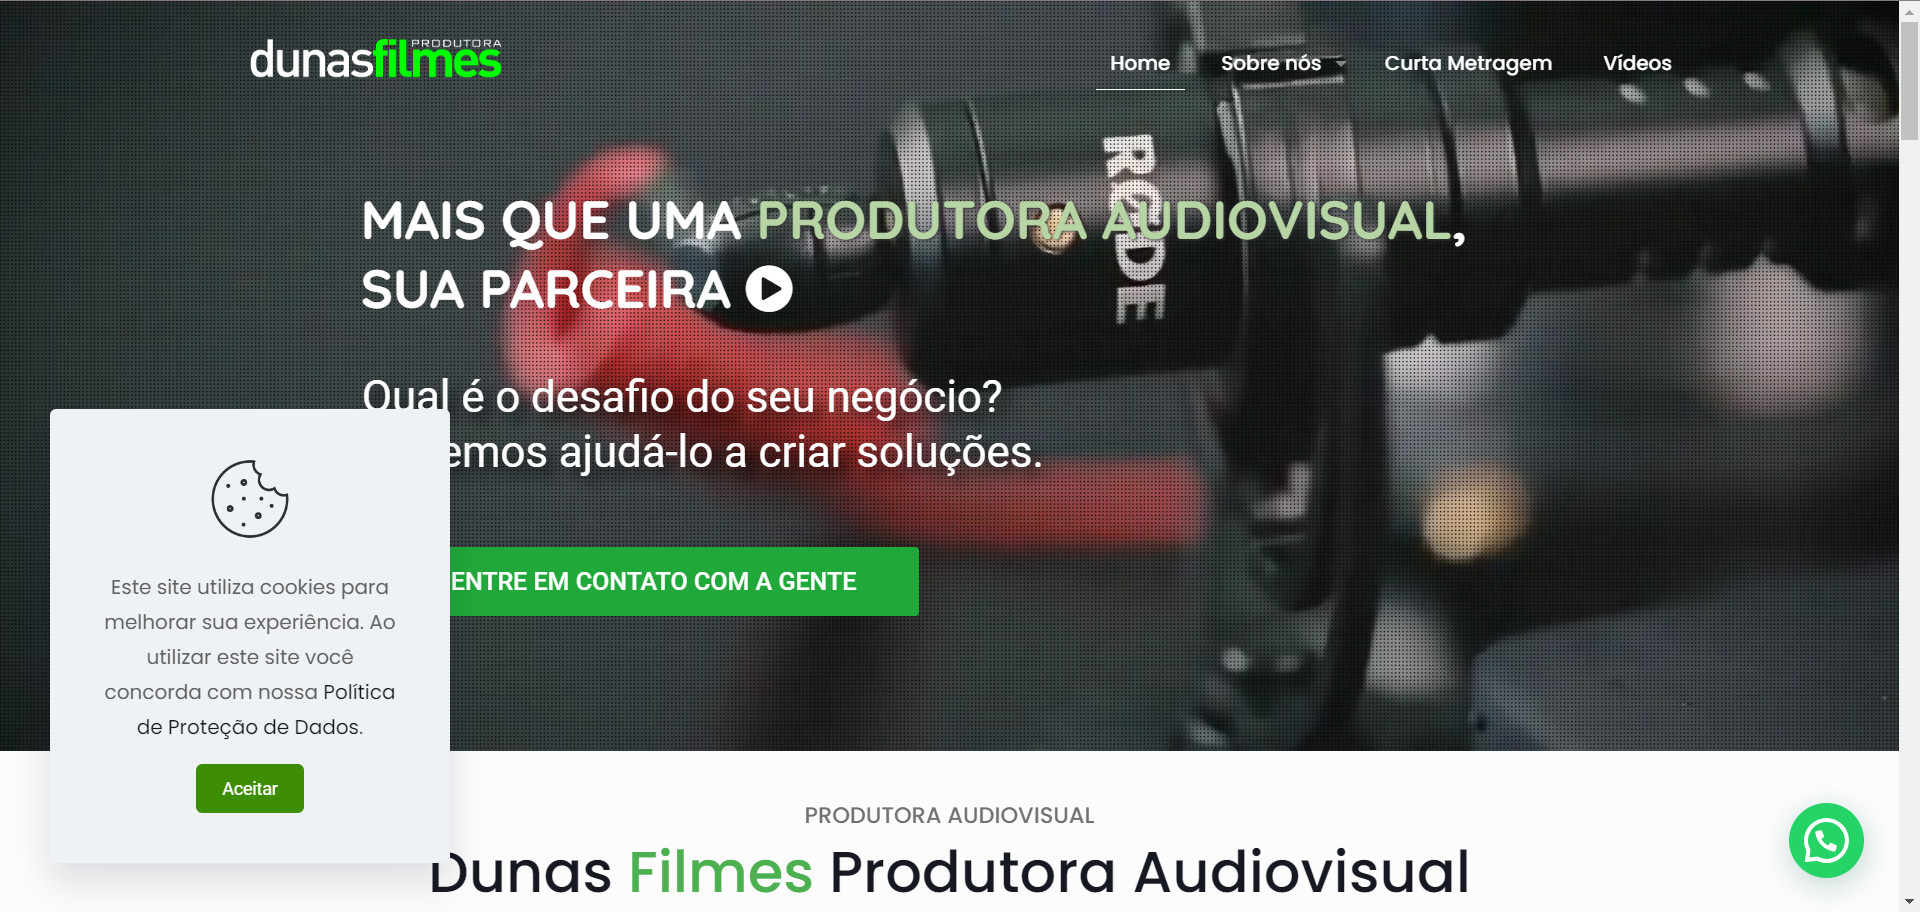 dunas-filmes-produtora-audiovisual